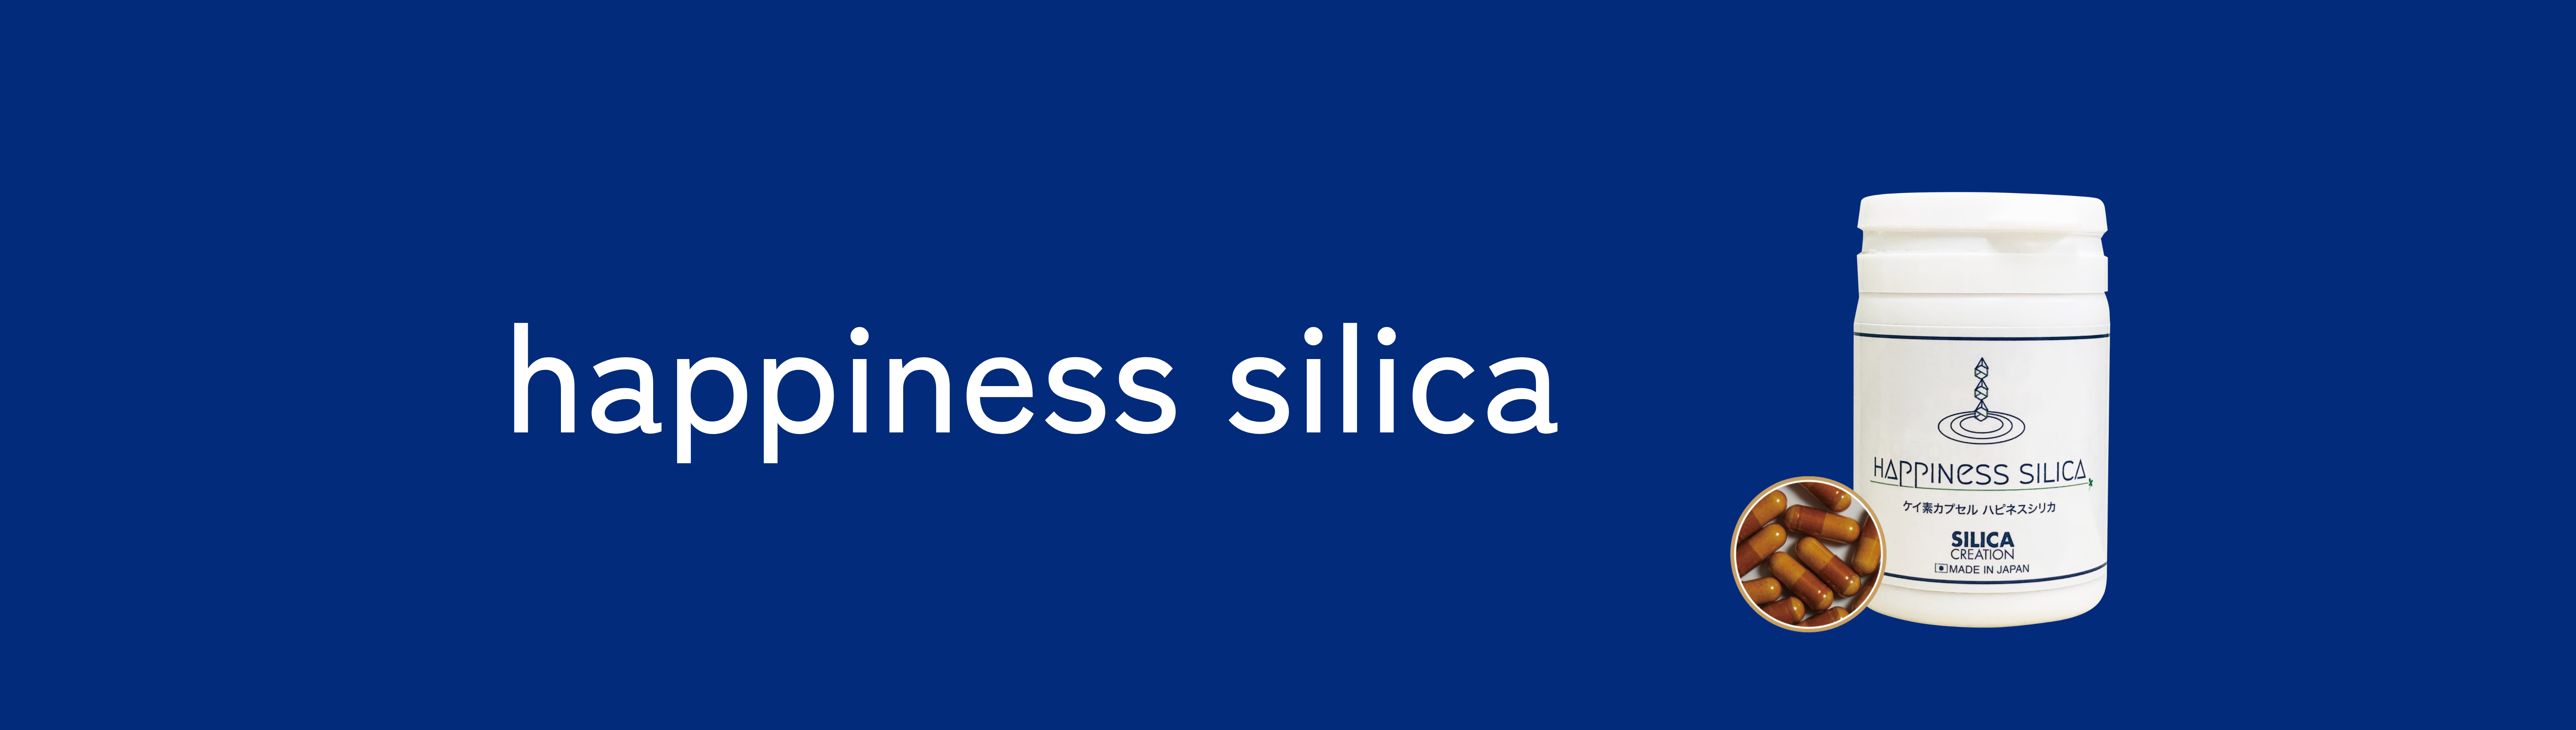 happiness silica ハピネスシリカ - SILICA CREATION